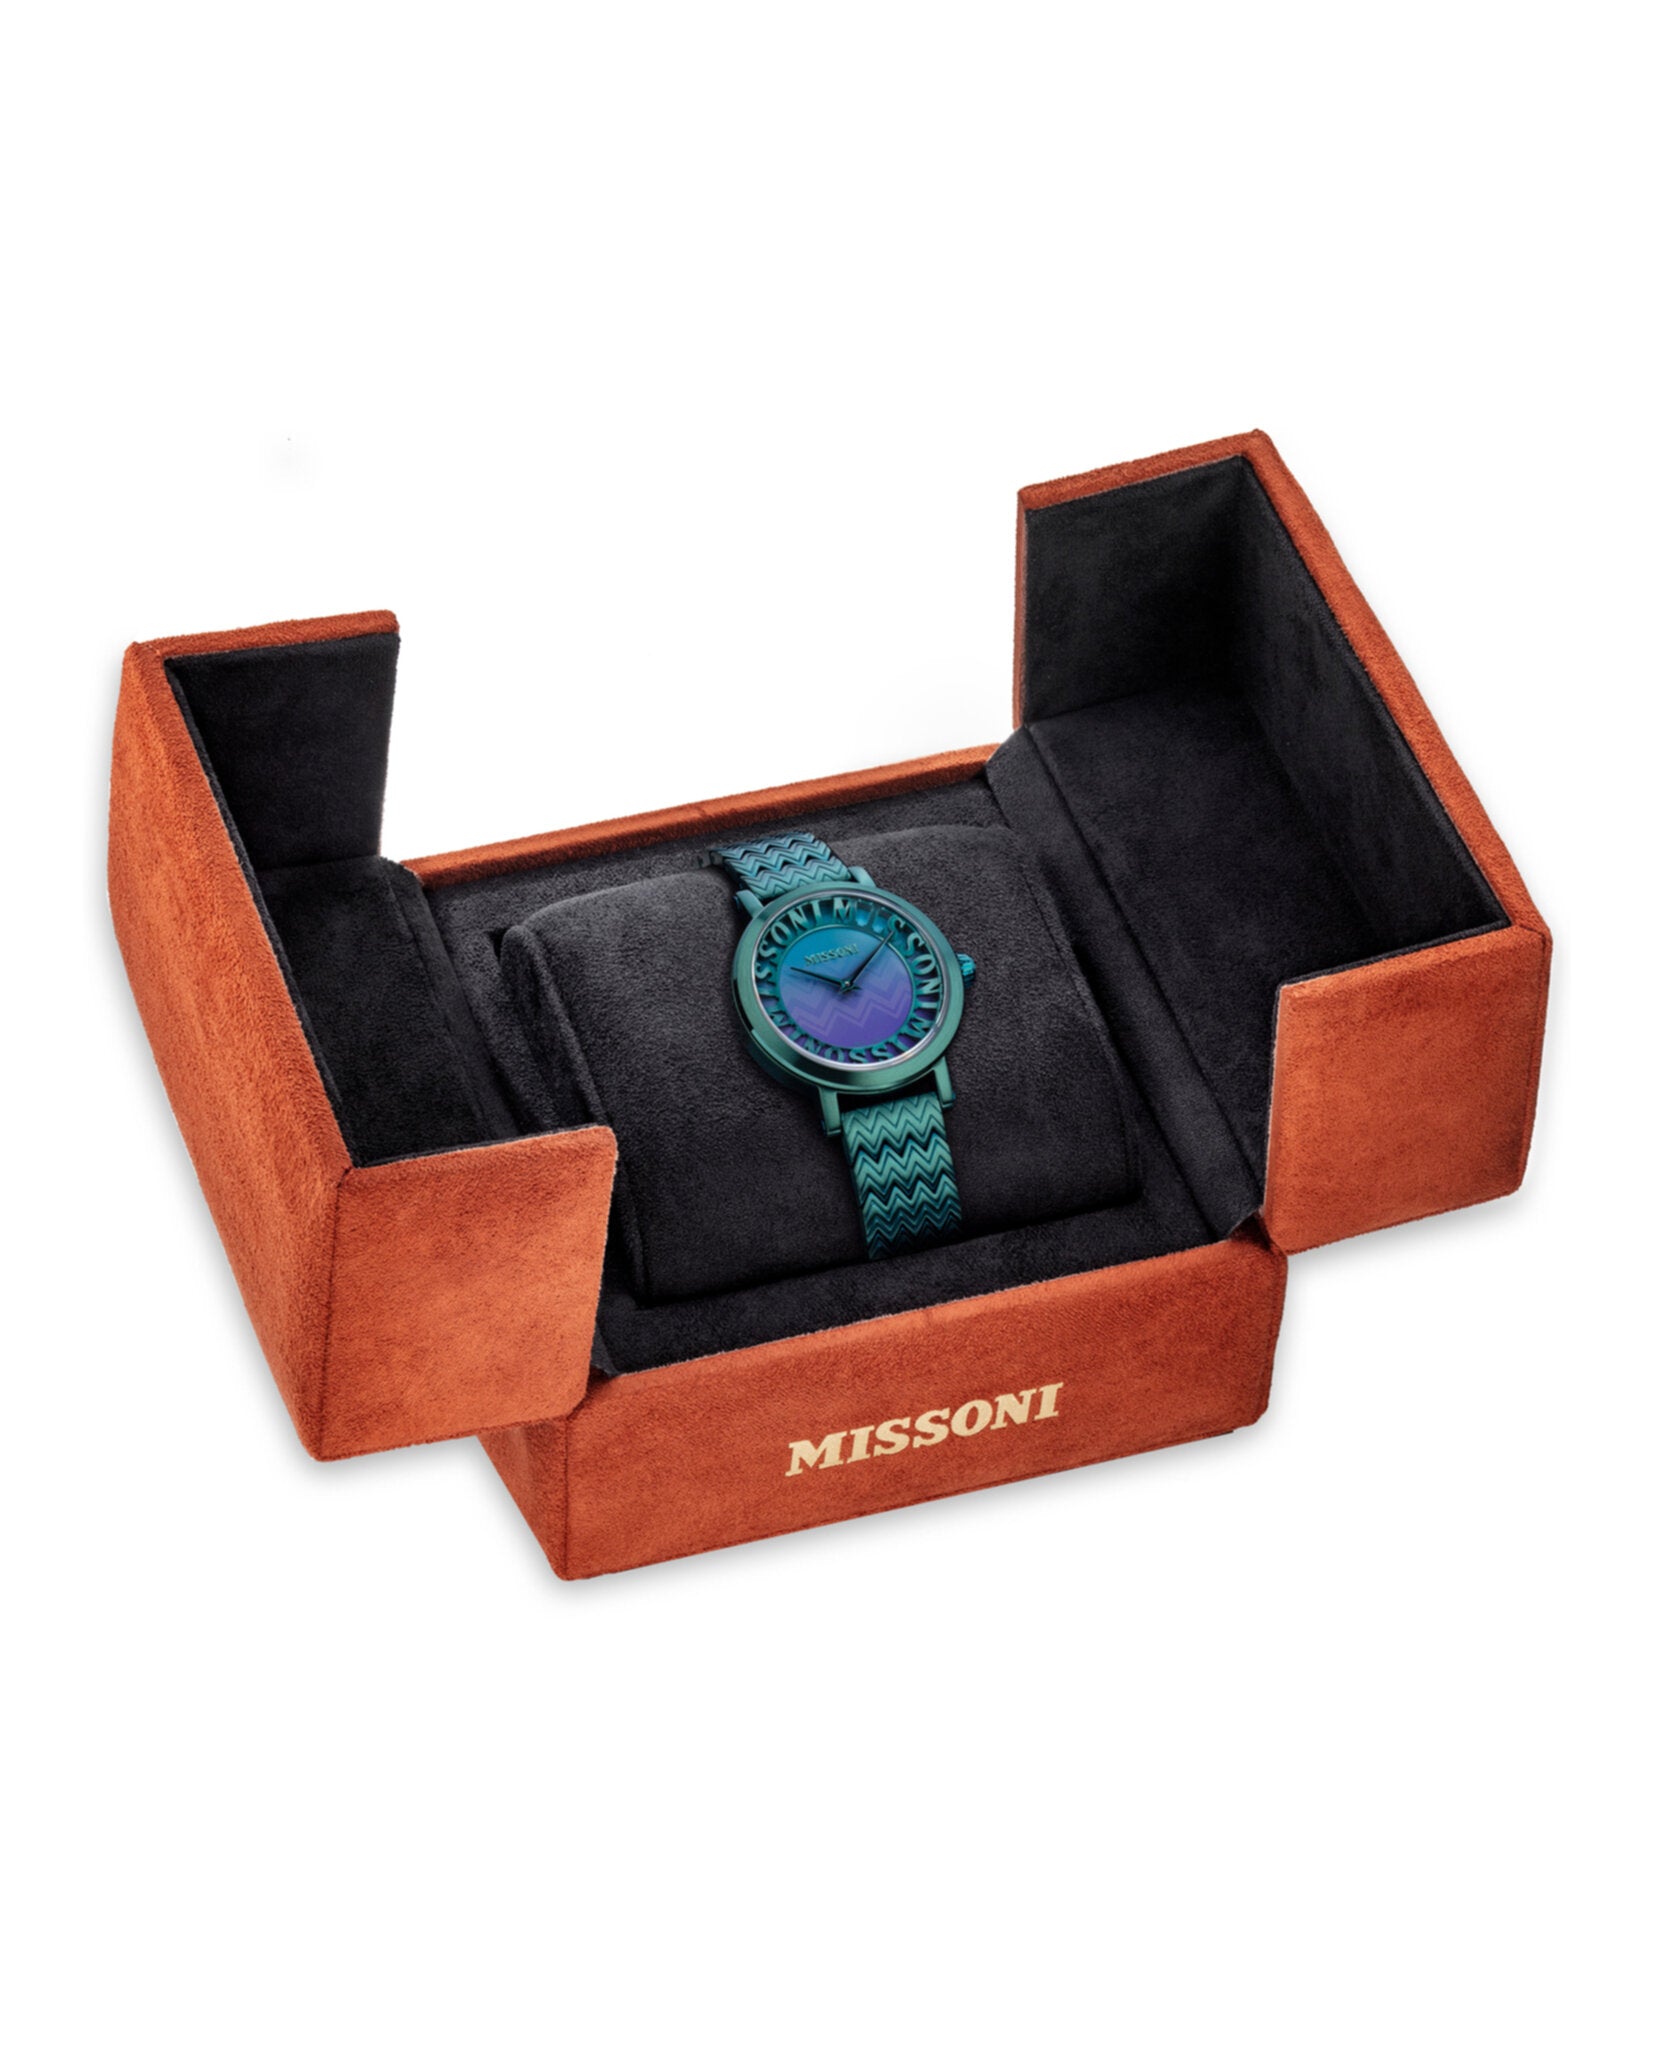 Missoni Melrose Bracelet Watch